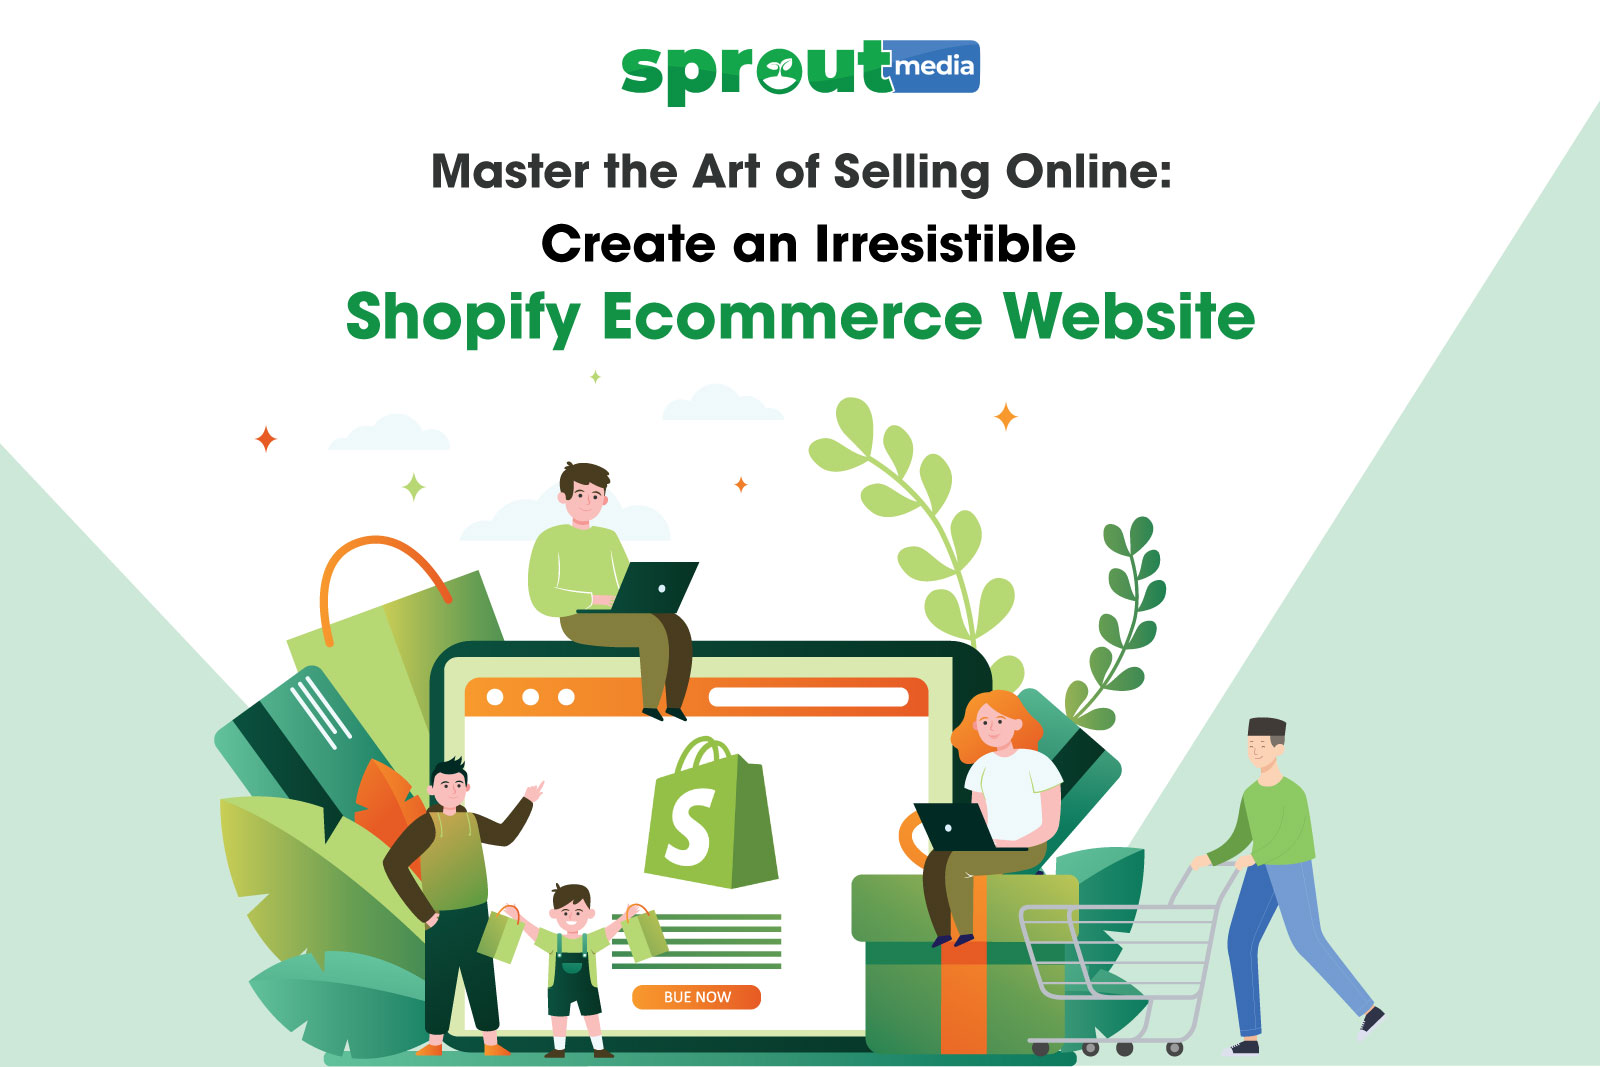 Shopify Ecommerce Website